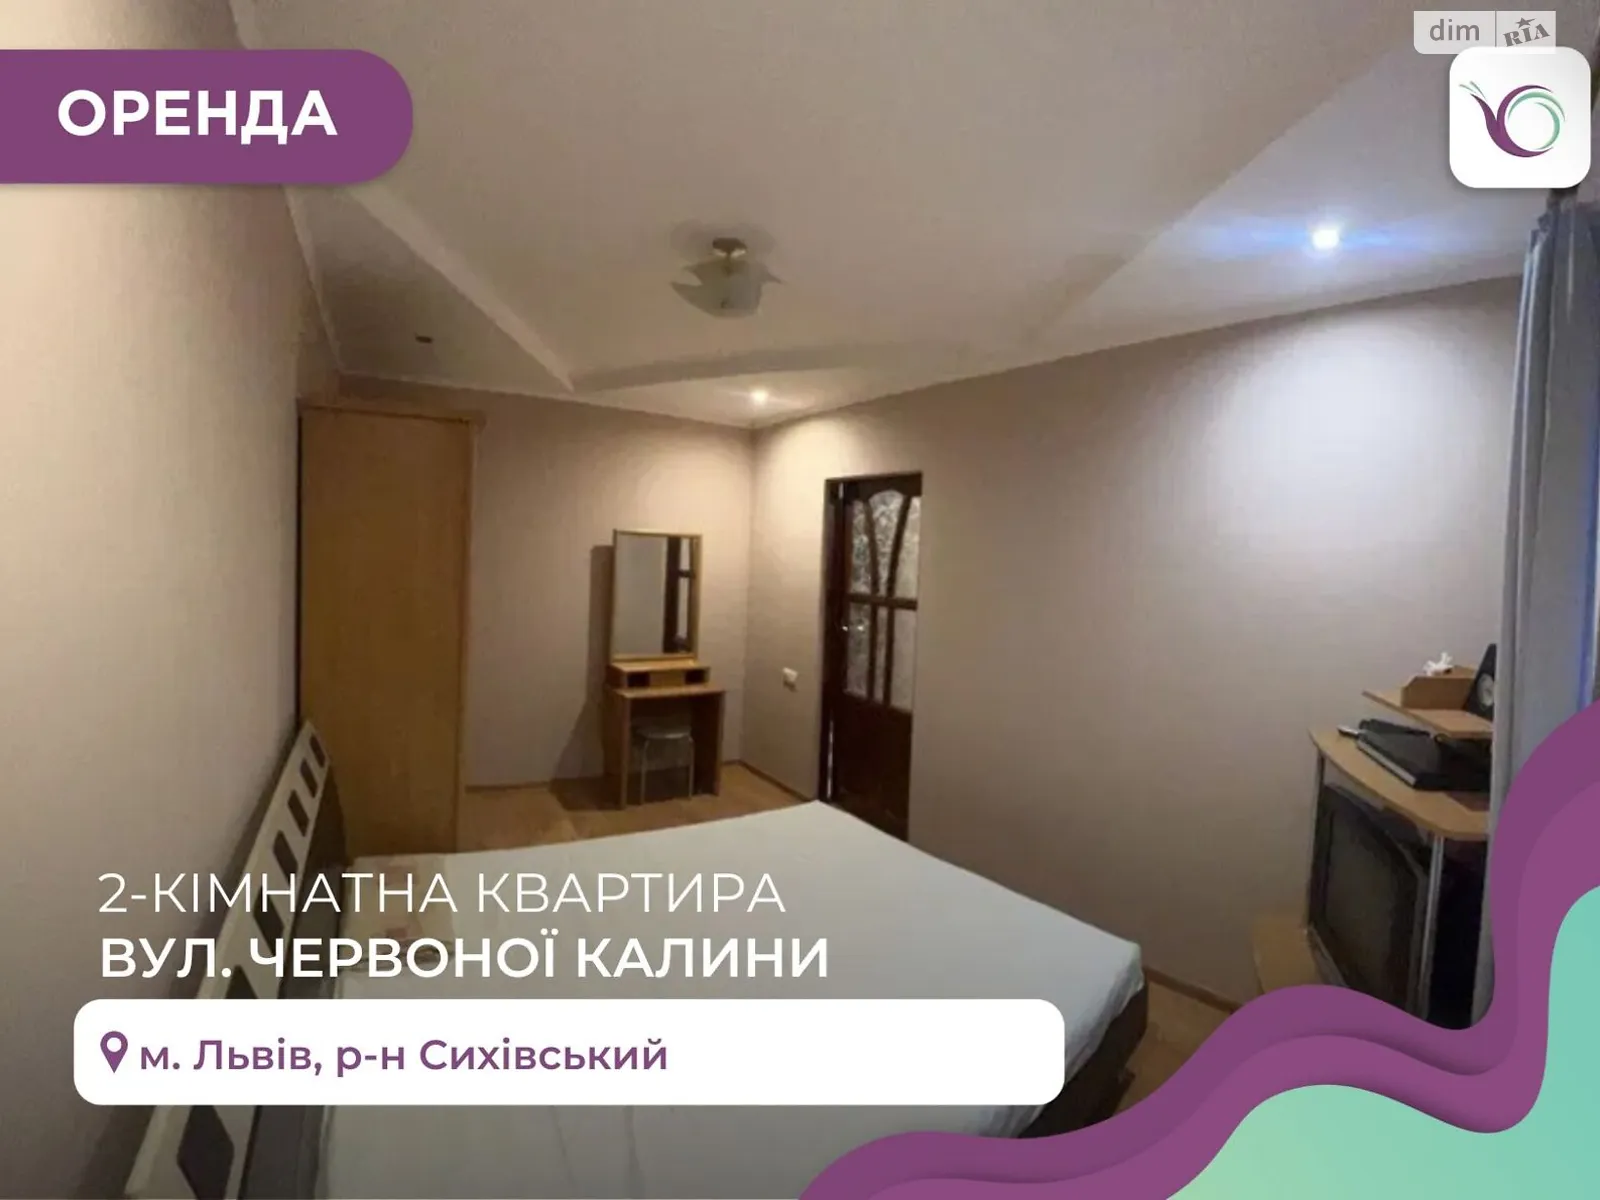 Сдается в аренду 2-комнатная квартира 51 кв. м в Львове, цена: 13000 грн - фото 1